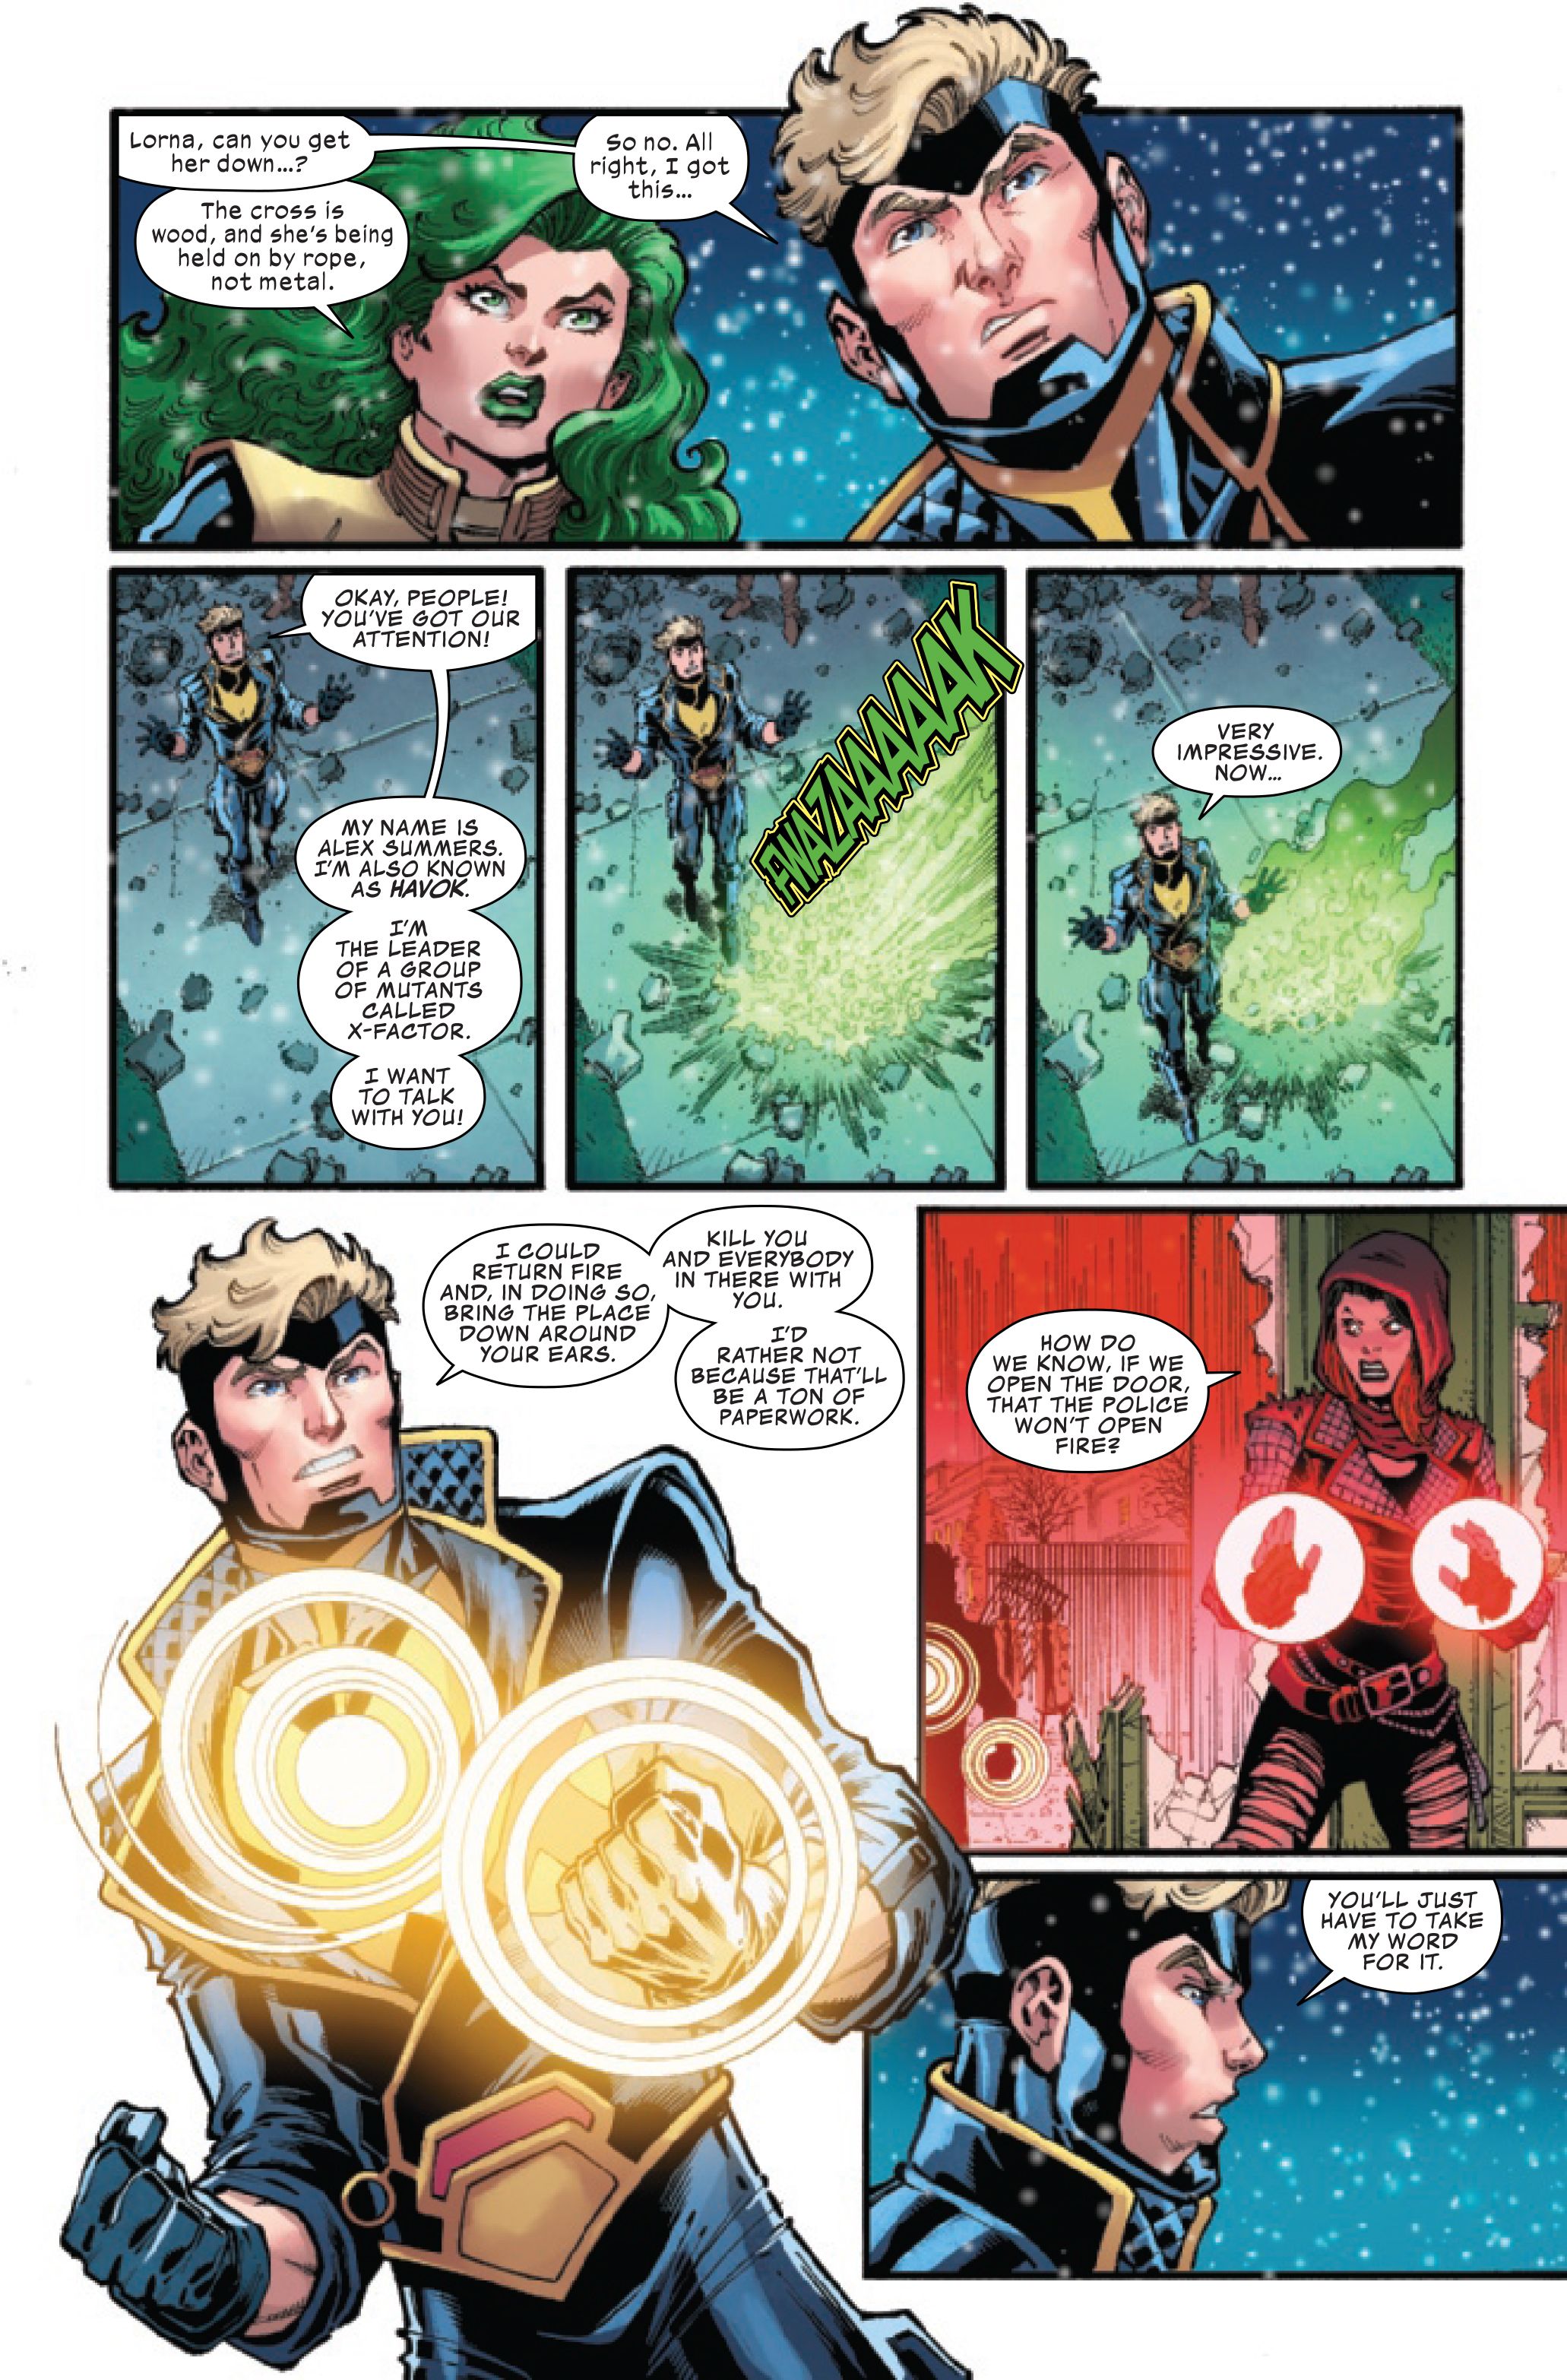 Page 3 of X-Men Legends #6, by Peter David, Todd Nauck, Rachelle Rosenberg and VC's Joe Caramagna.